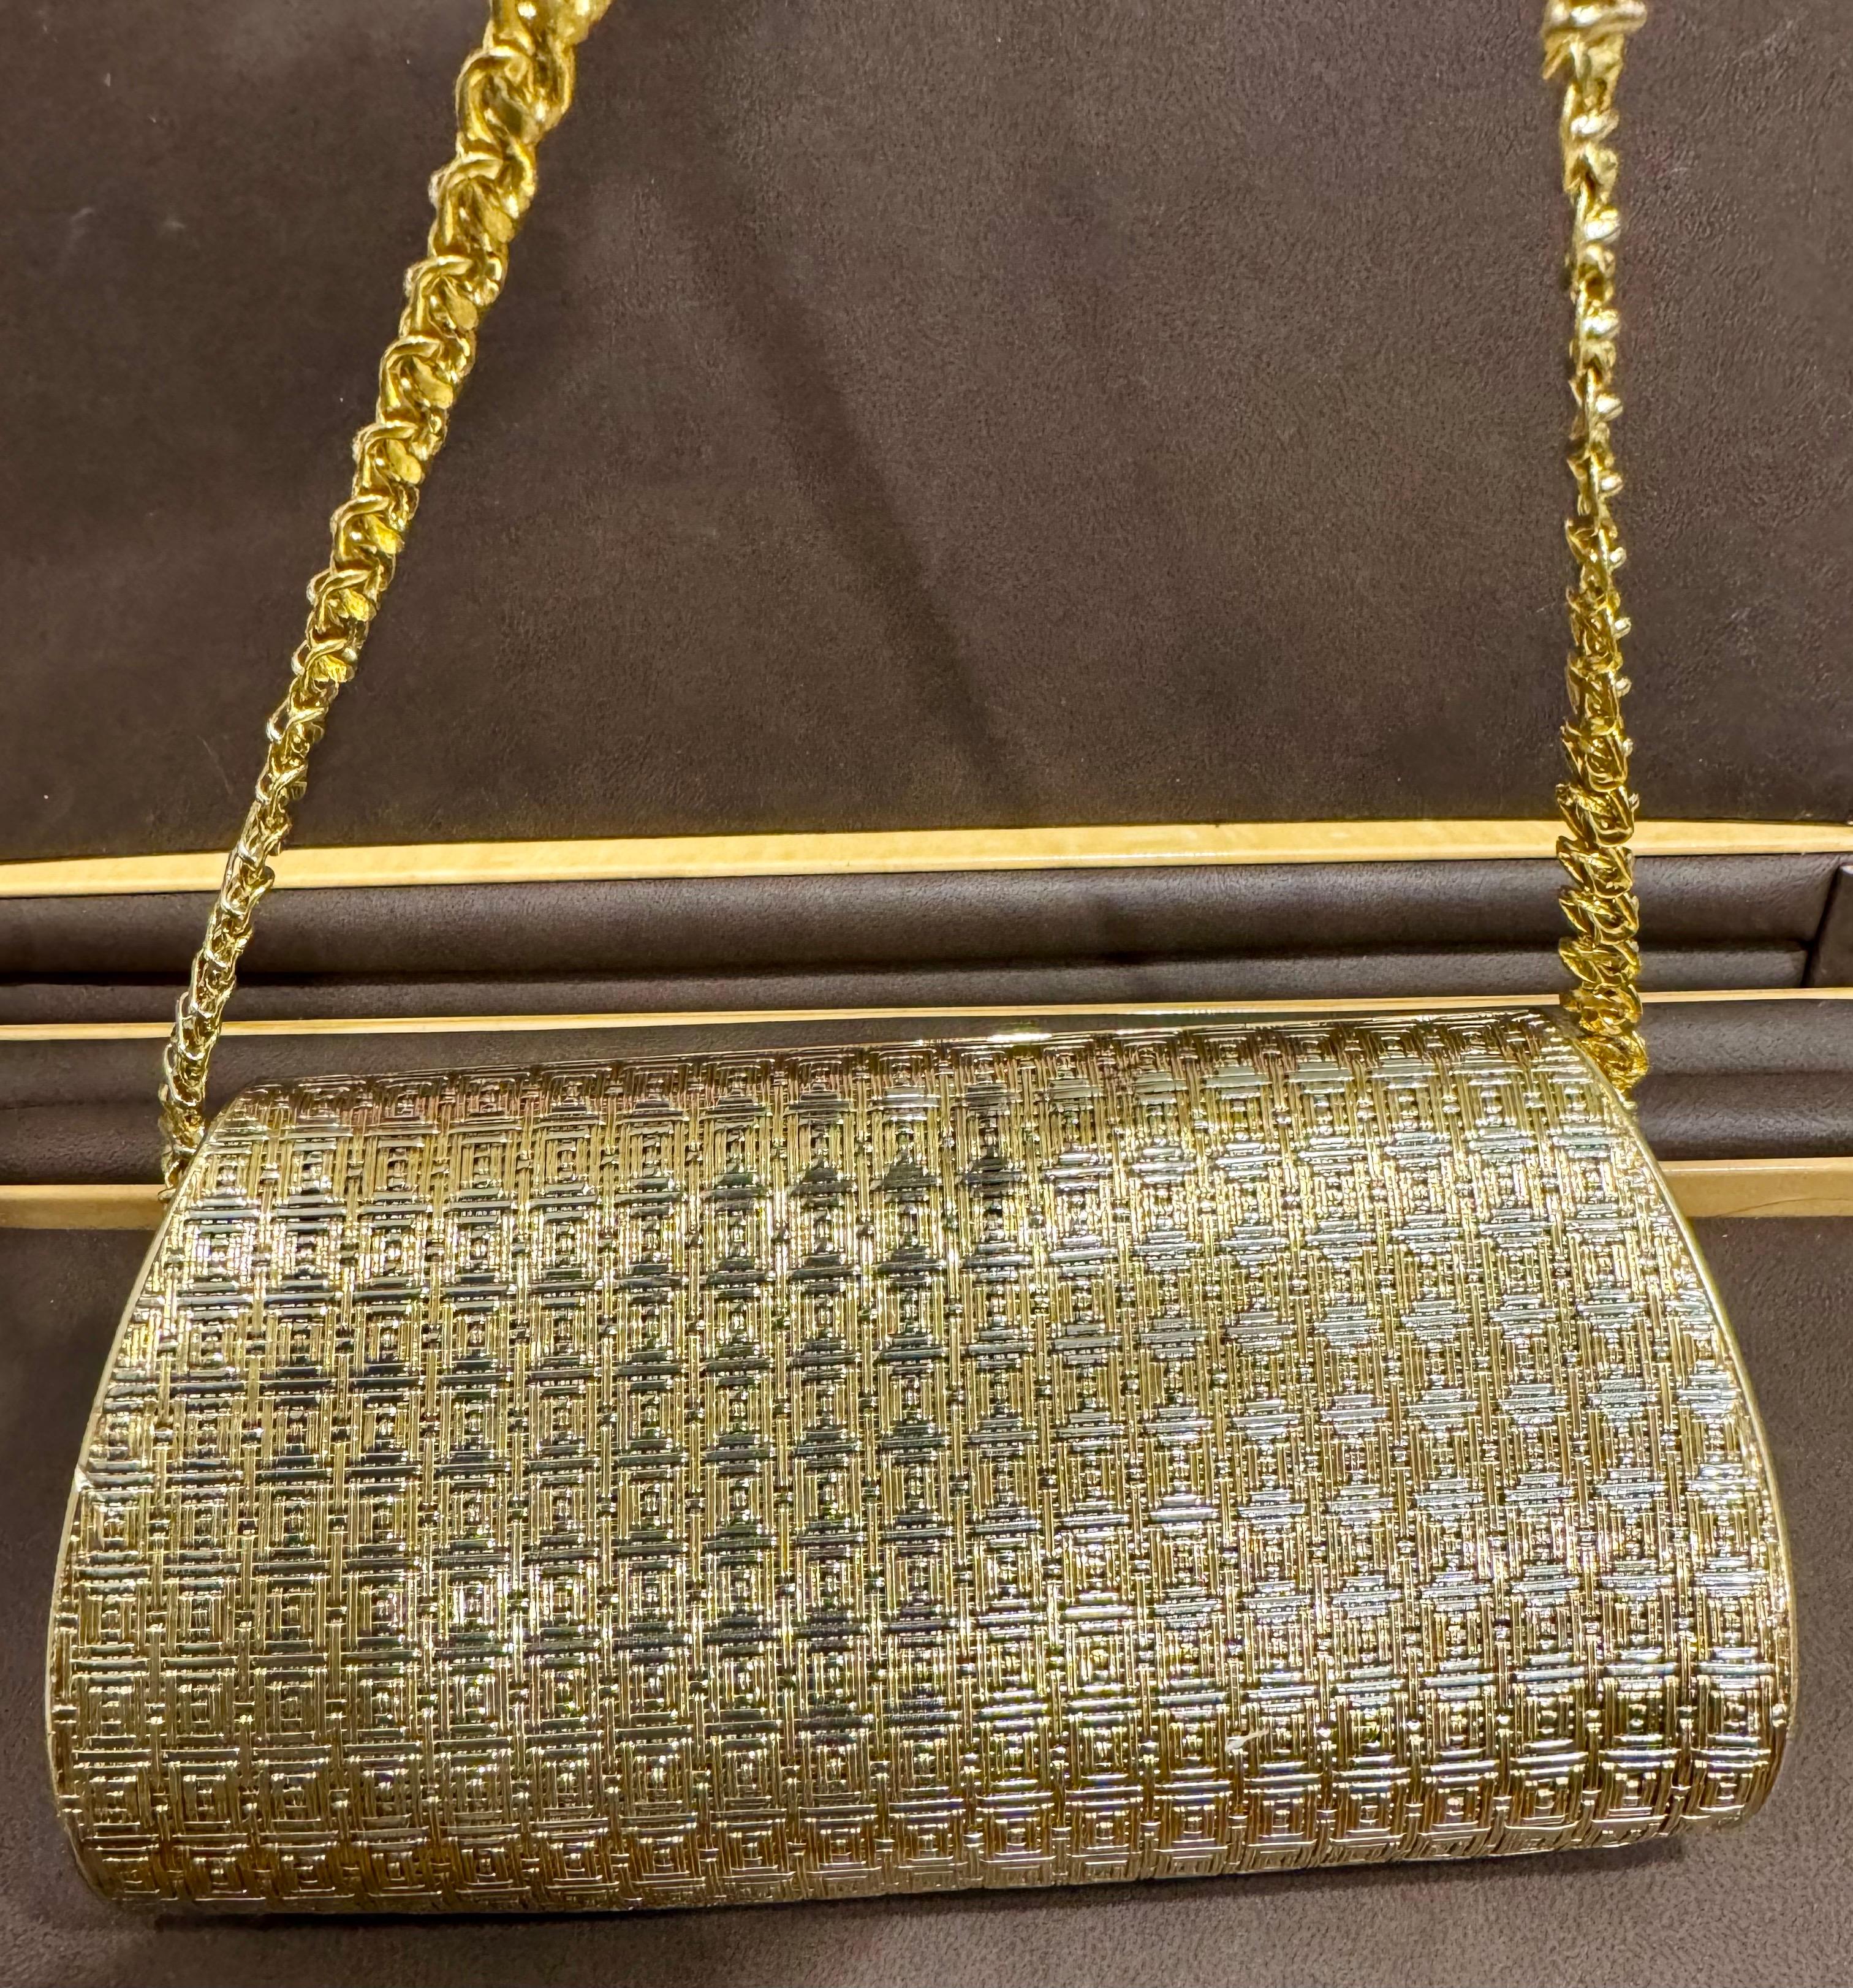  378 Gm of 18 Karat Yellow Gold Mesh Clutch Handbag with Shoulder Chain, Vintage 1